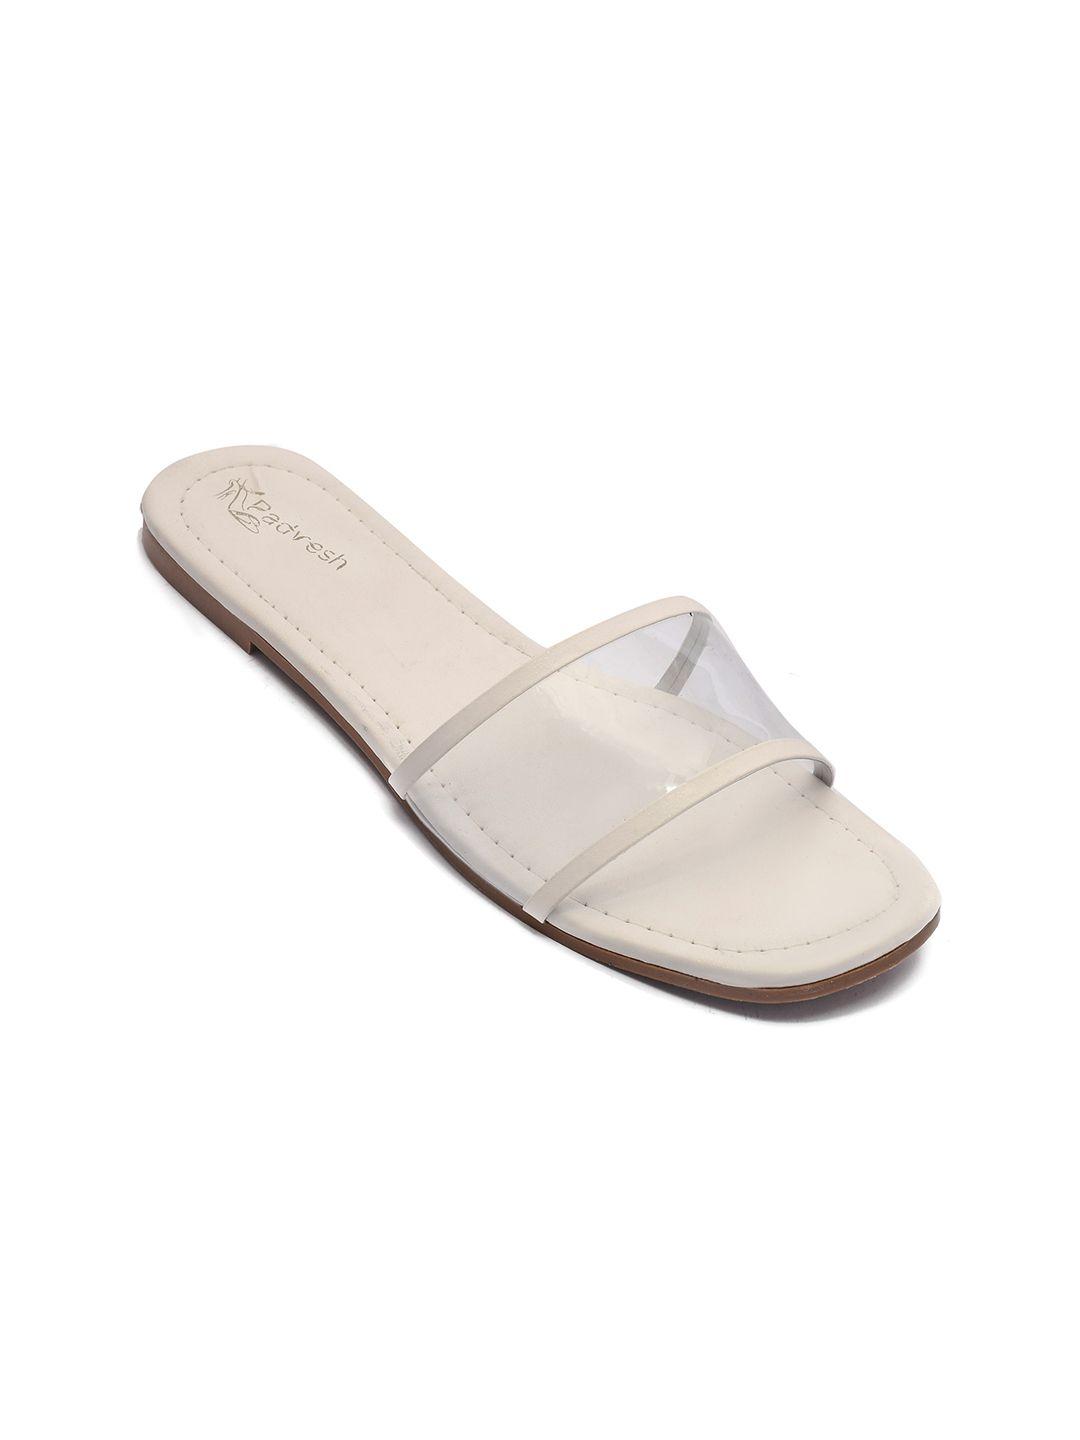 padvesh women white solid open toe flats